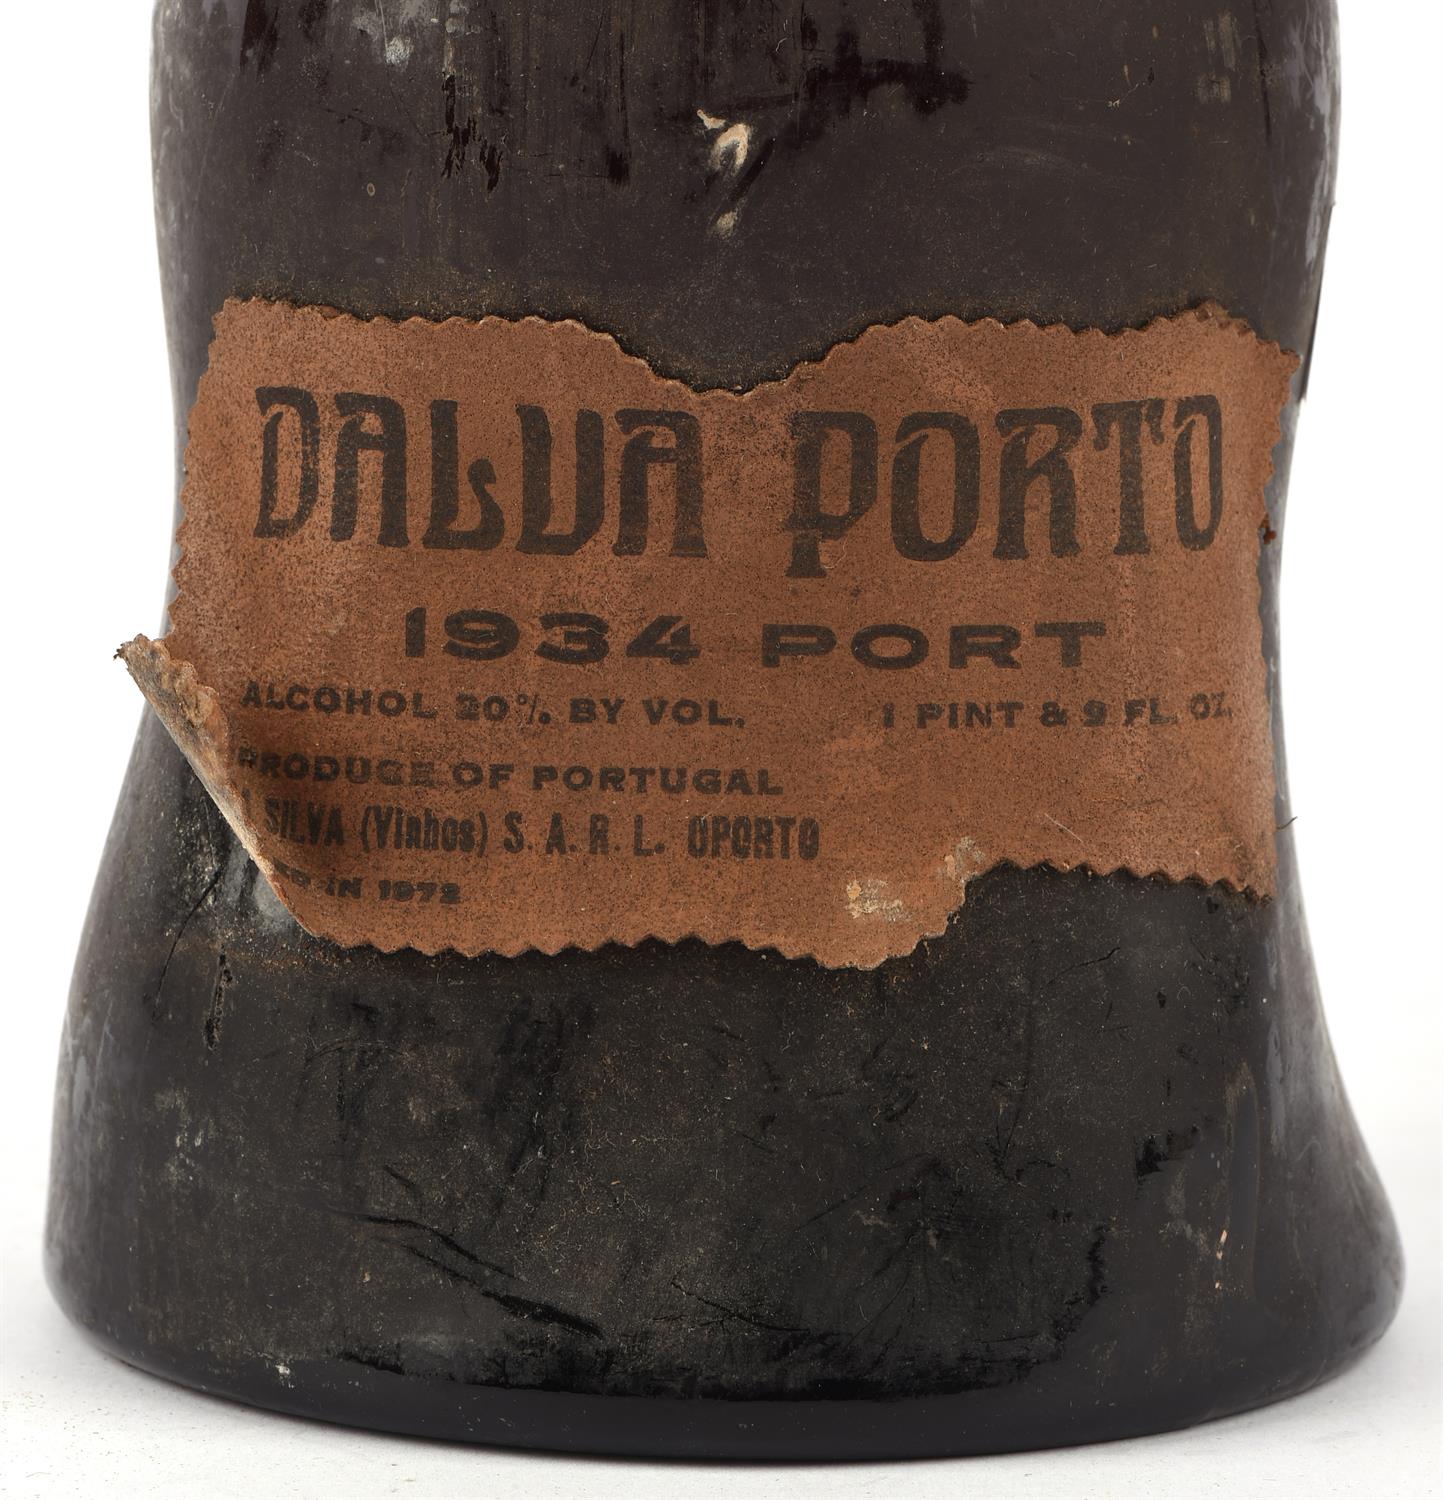 Port, Porto D' Alva 1934, one bottle - Image 2 of 4